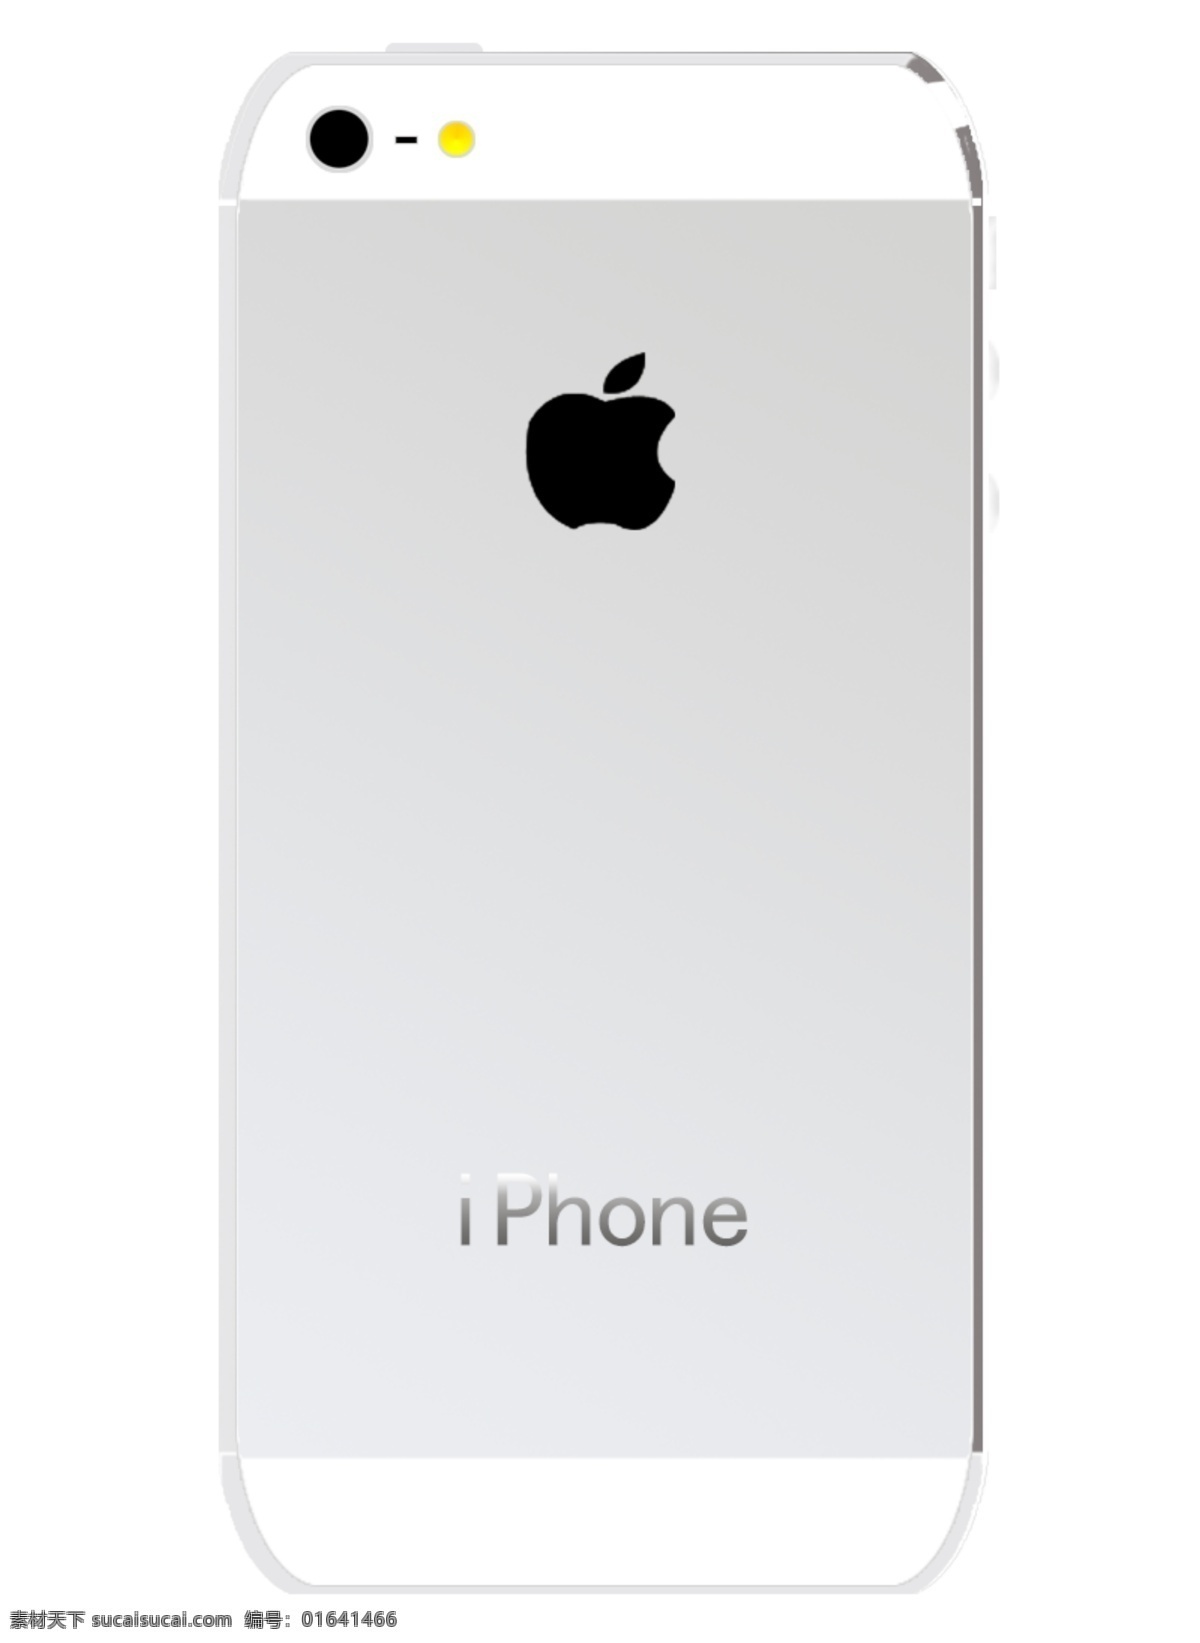 iphon 模型 苹果 iphone 反面 苹果手机模型 苹果手机反面